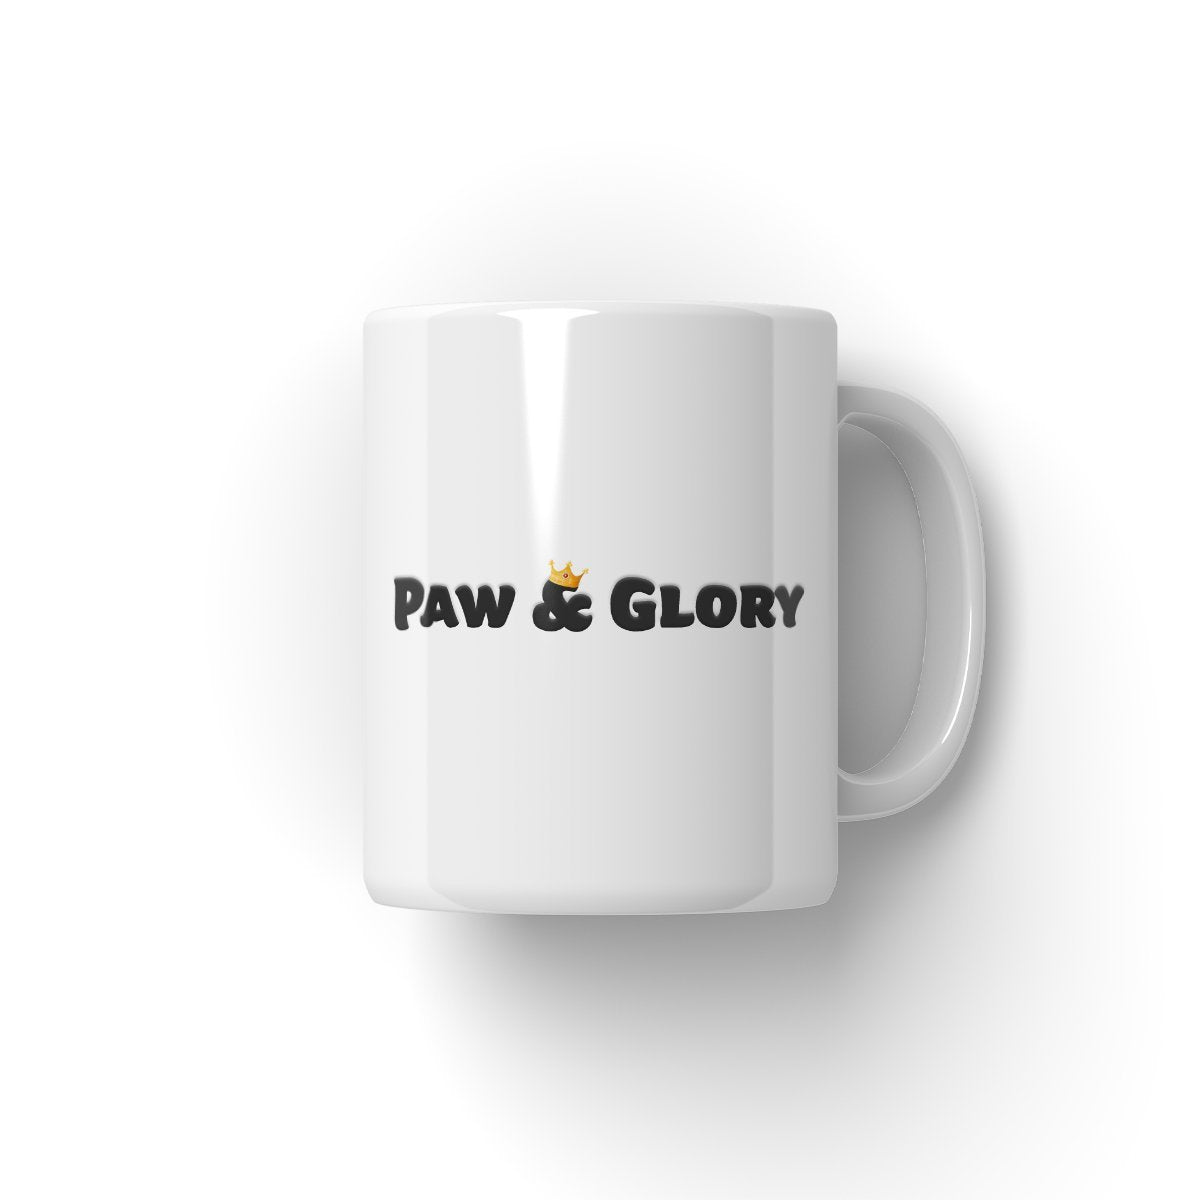 His Majesty: Custom Pet Mug - Paw & Glory - #pet portraits# - #dog portraits# - #pet portraits uk#paw & glory, pet portraits Mug,dog coffee mug custom, mugs with pets, coffee mug with dog picture, customized dog coffee mugs, your dog on a mug, custom pet portrait mug